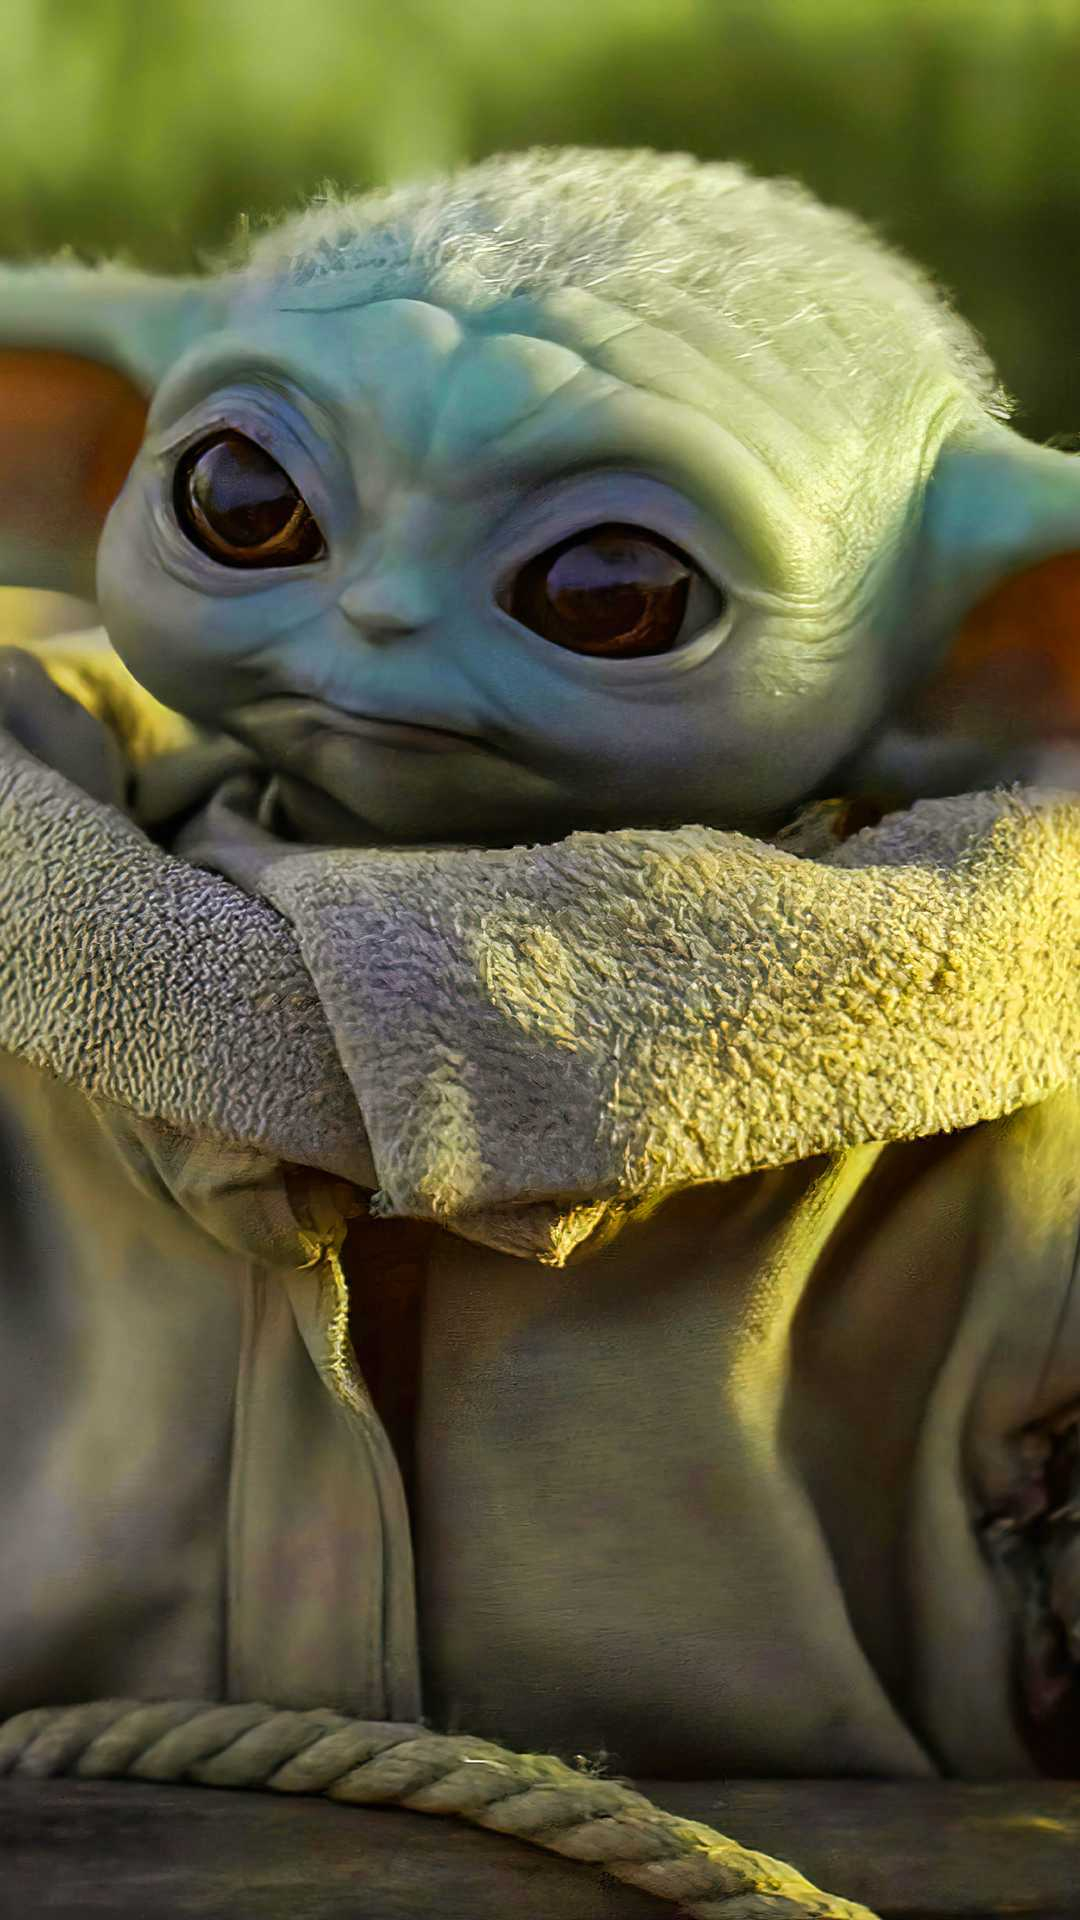 1080x1920 Baby Yoda Wallpaper